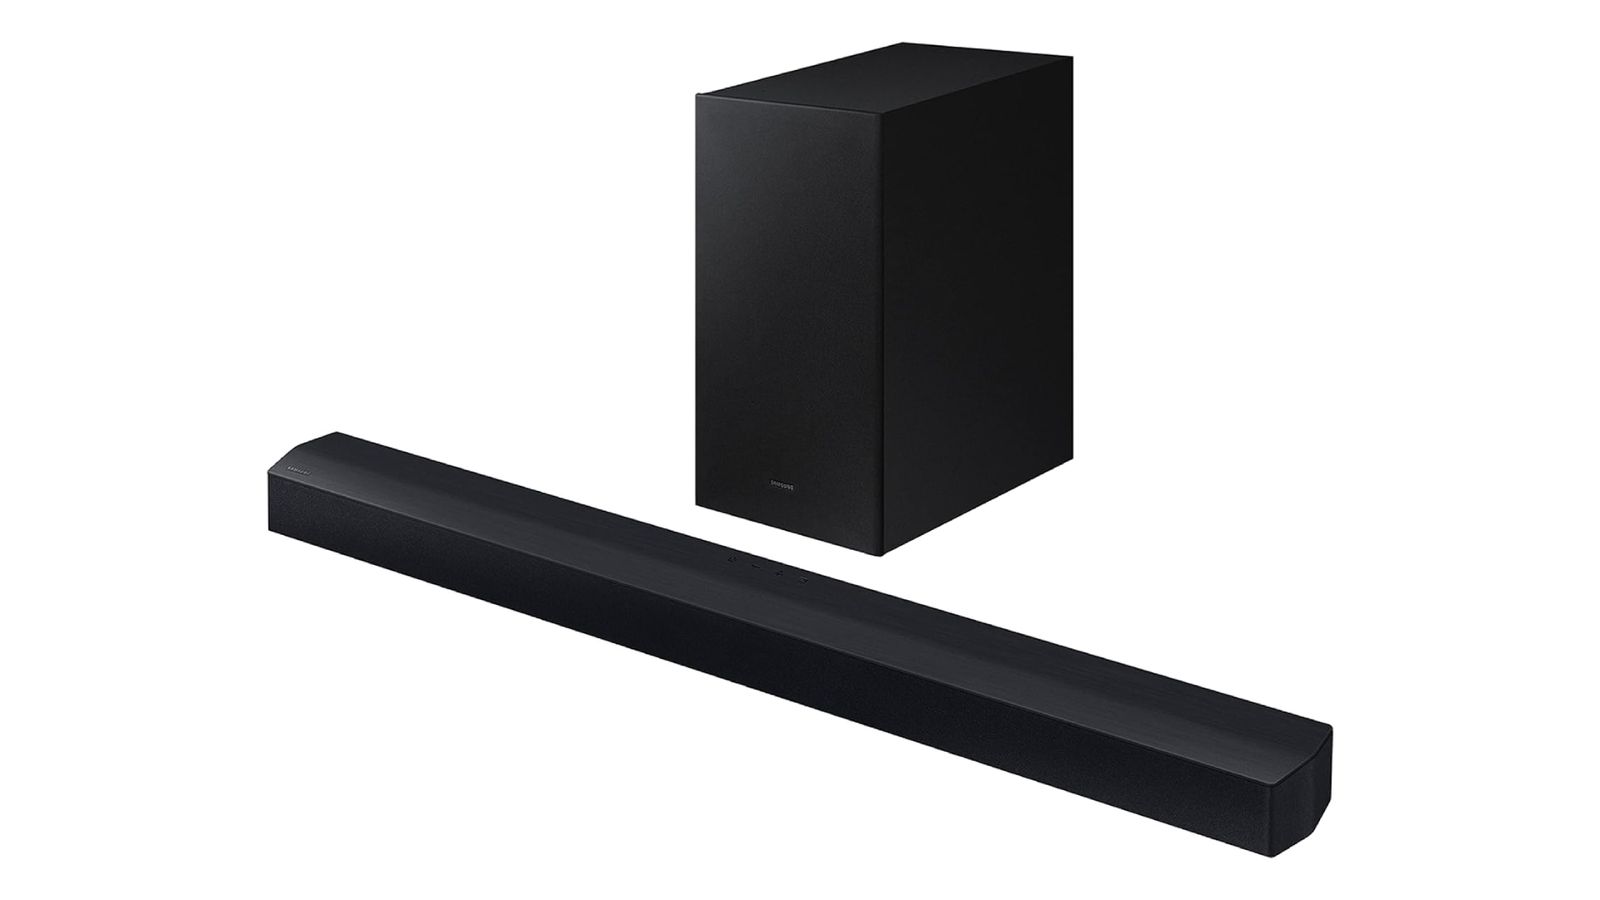 Samsung HW-C450 product image of a black rectangular soundbar next to a subwoofer.